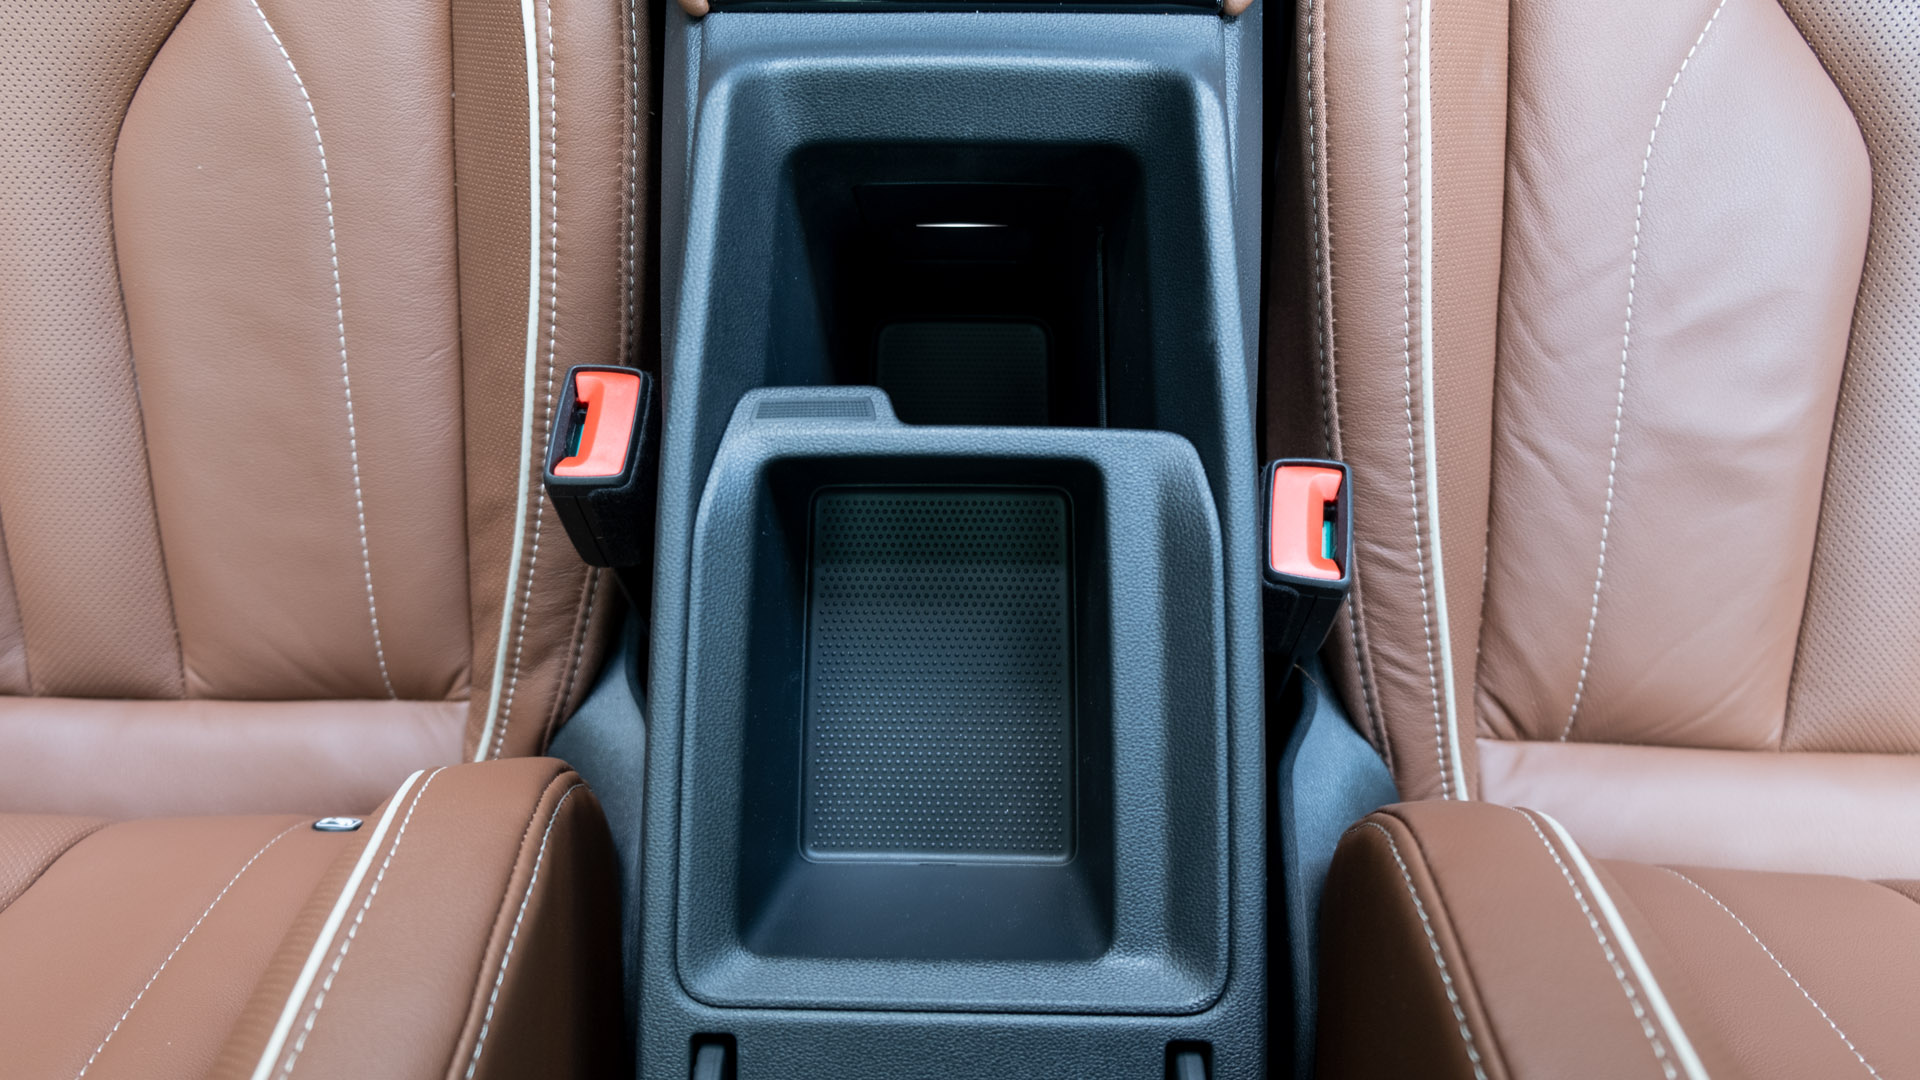 Skoda Enyaq iV armrest compartment